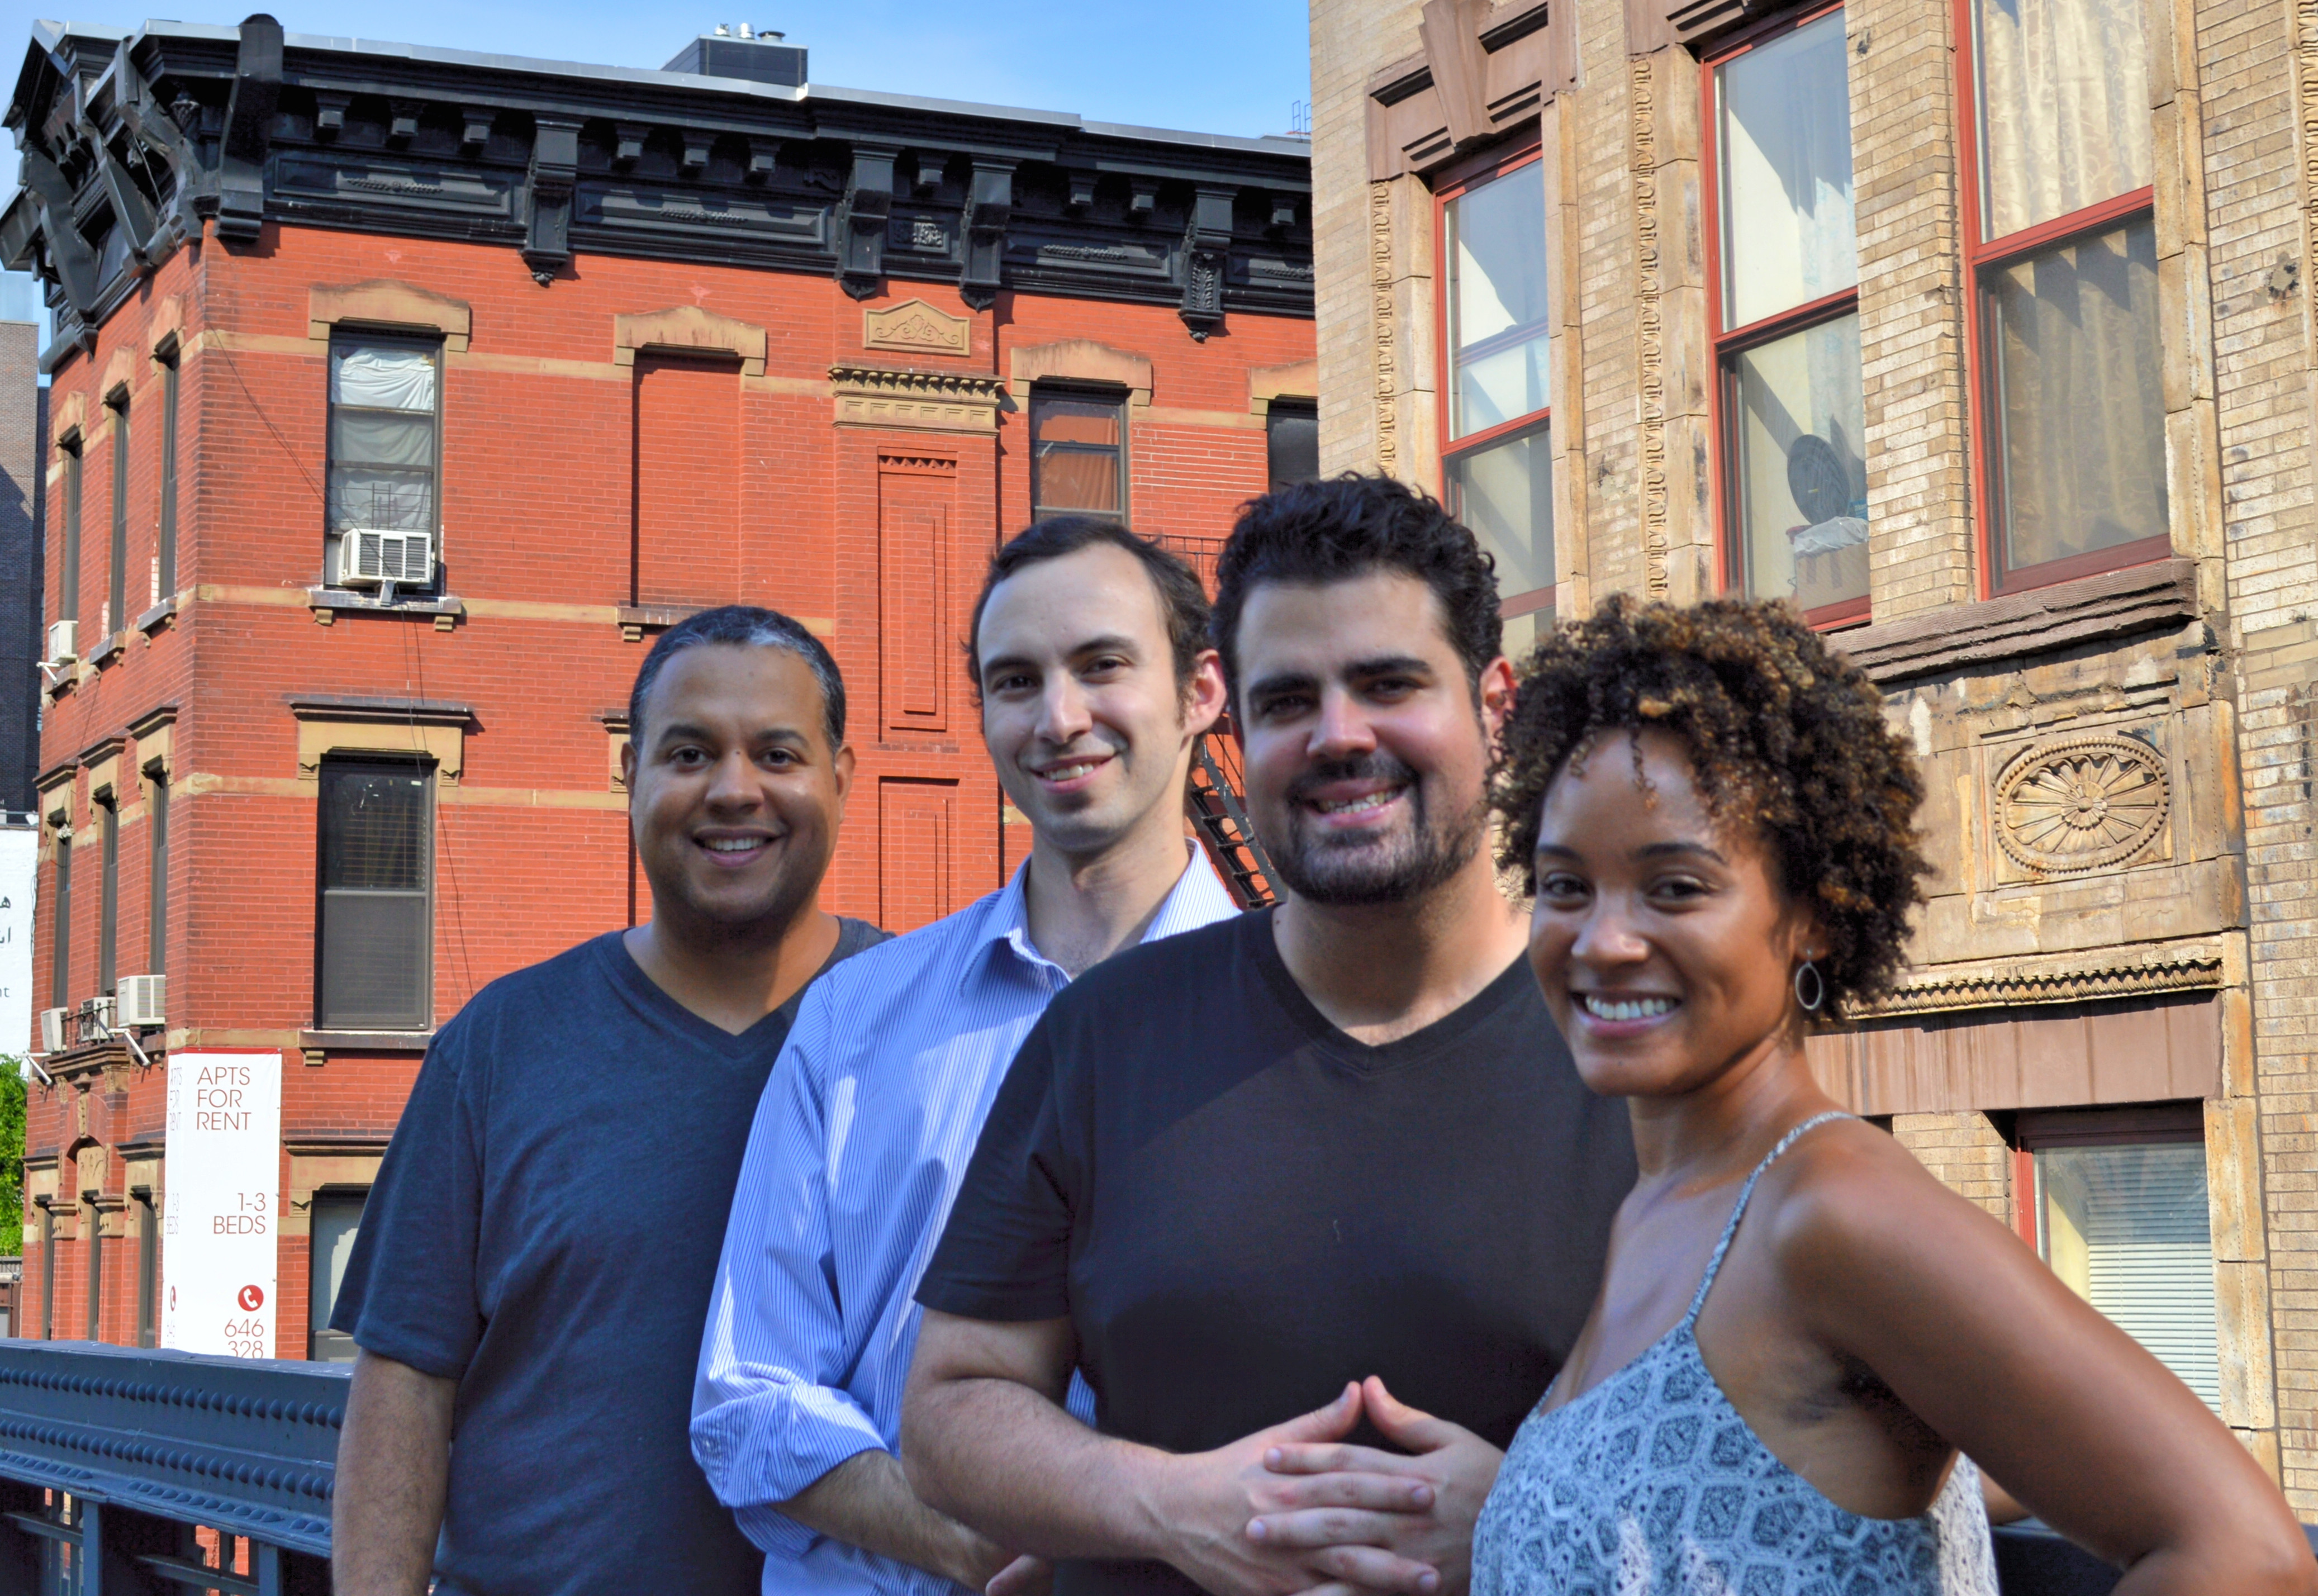 Harlem Quartet. PHOTO CREDIT: Amy Schroeder